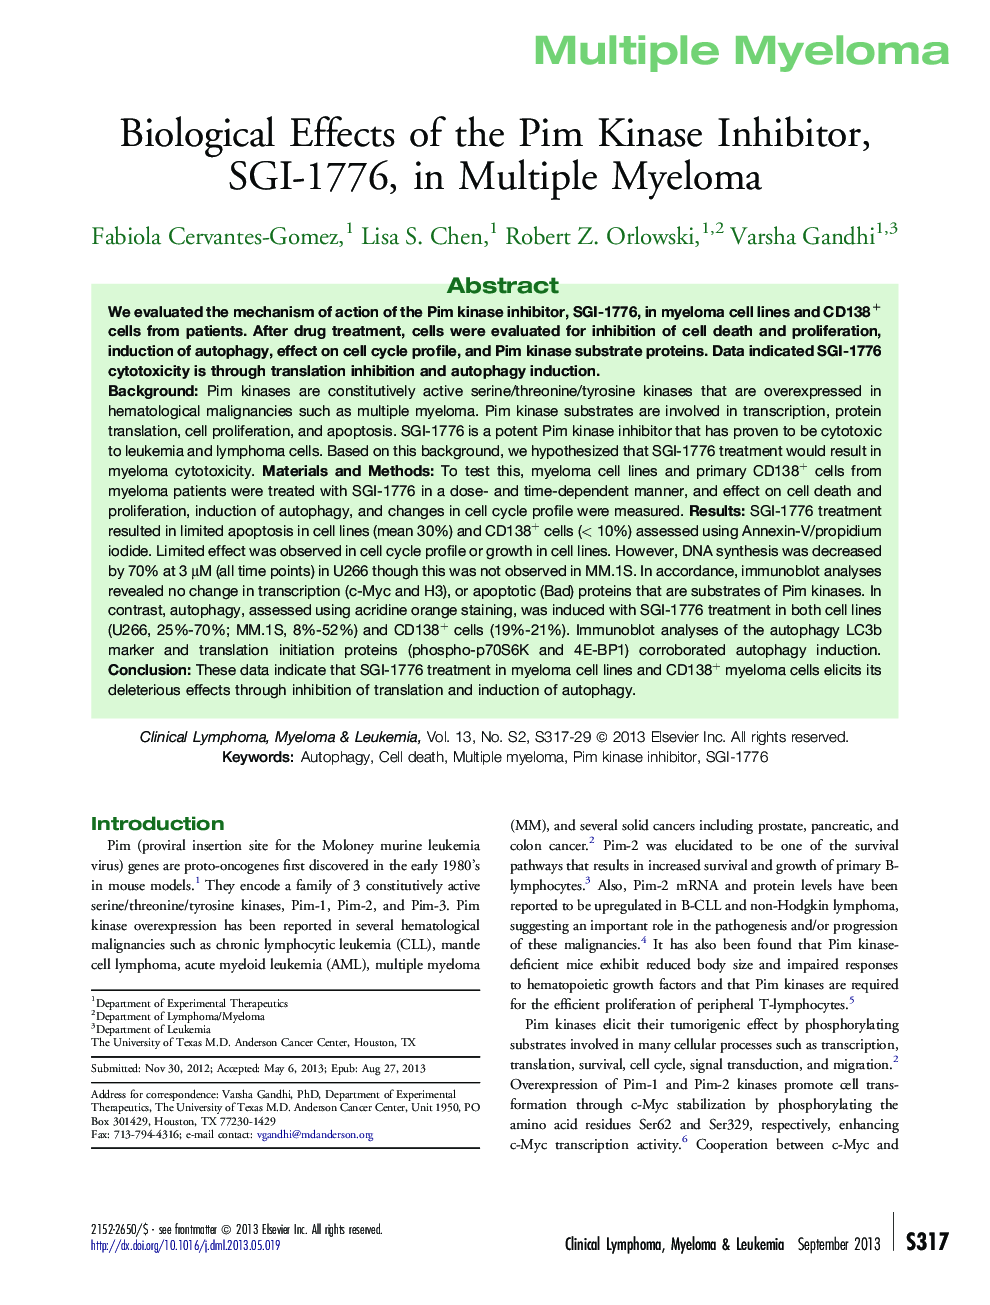 Biological Effects of the Pim Kinase Inhibitor, SGI-1776, in Multiple Myeloma